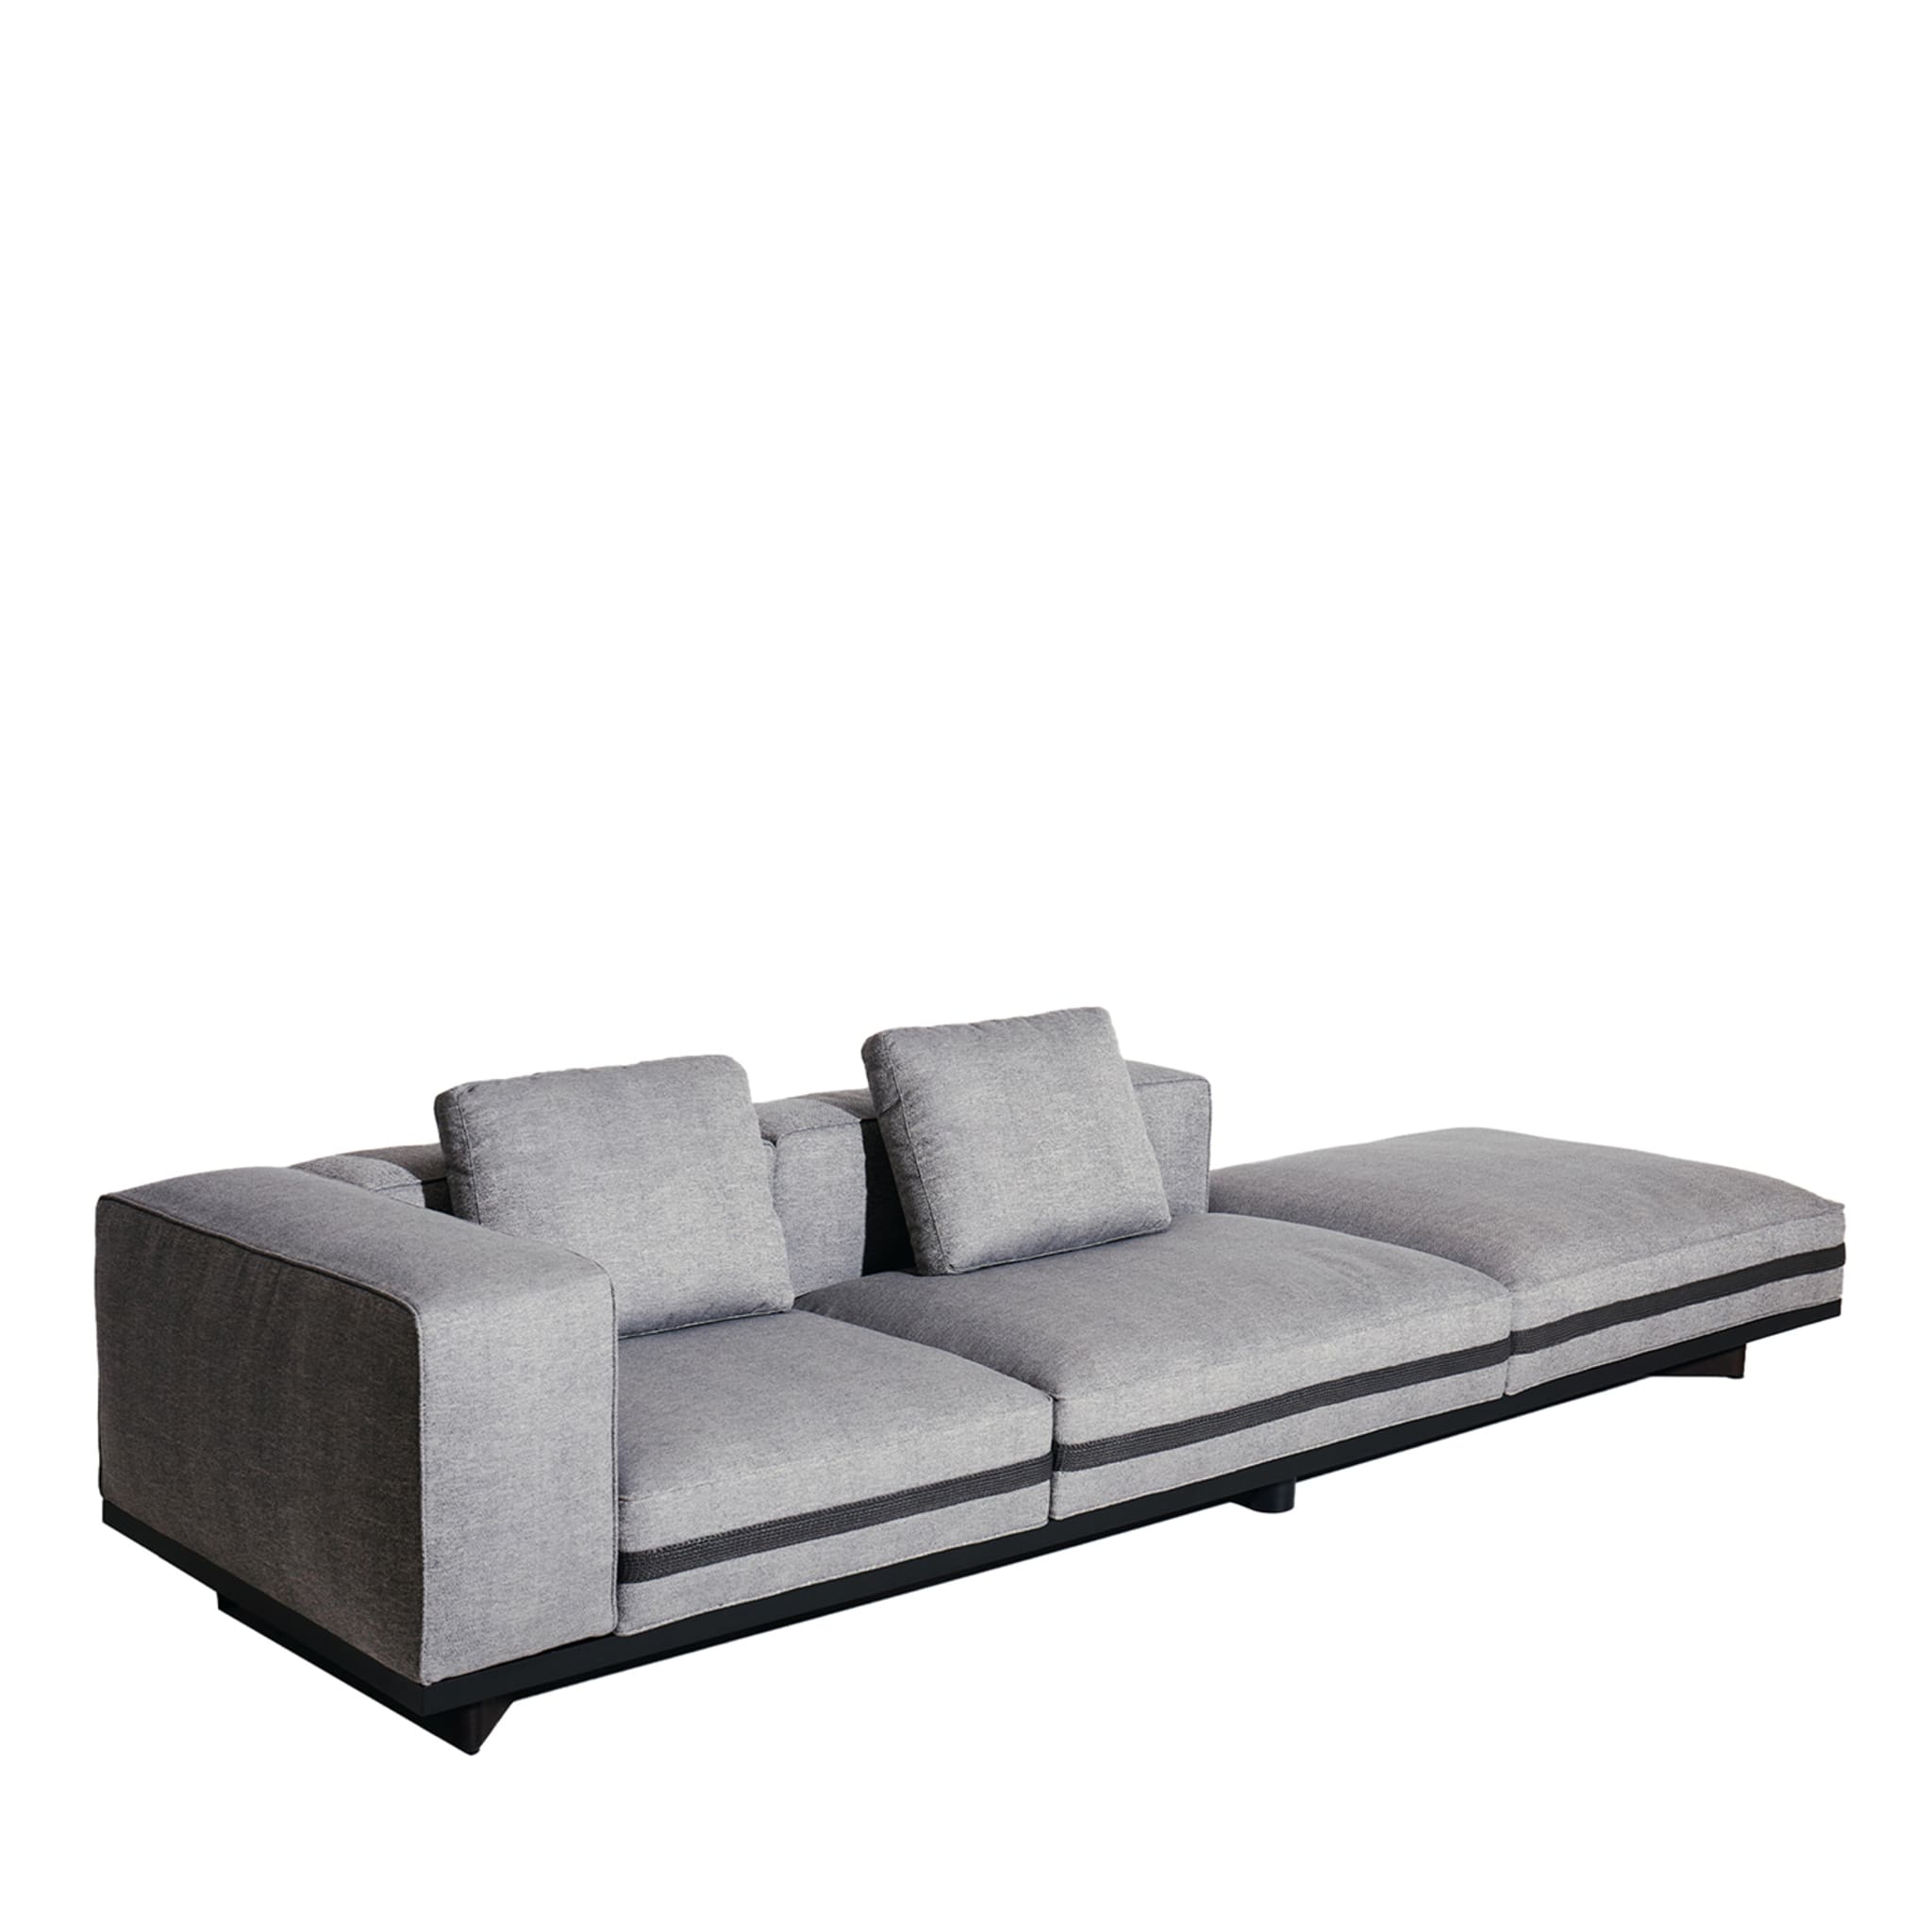 Saint Remy Gray Modular Sofa by Luca Nichetto - Main view